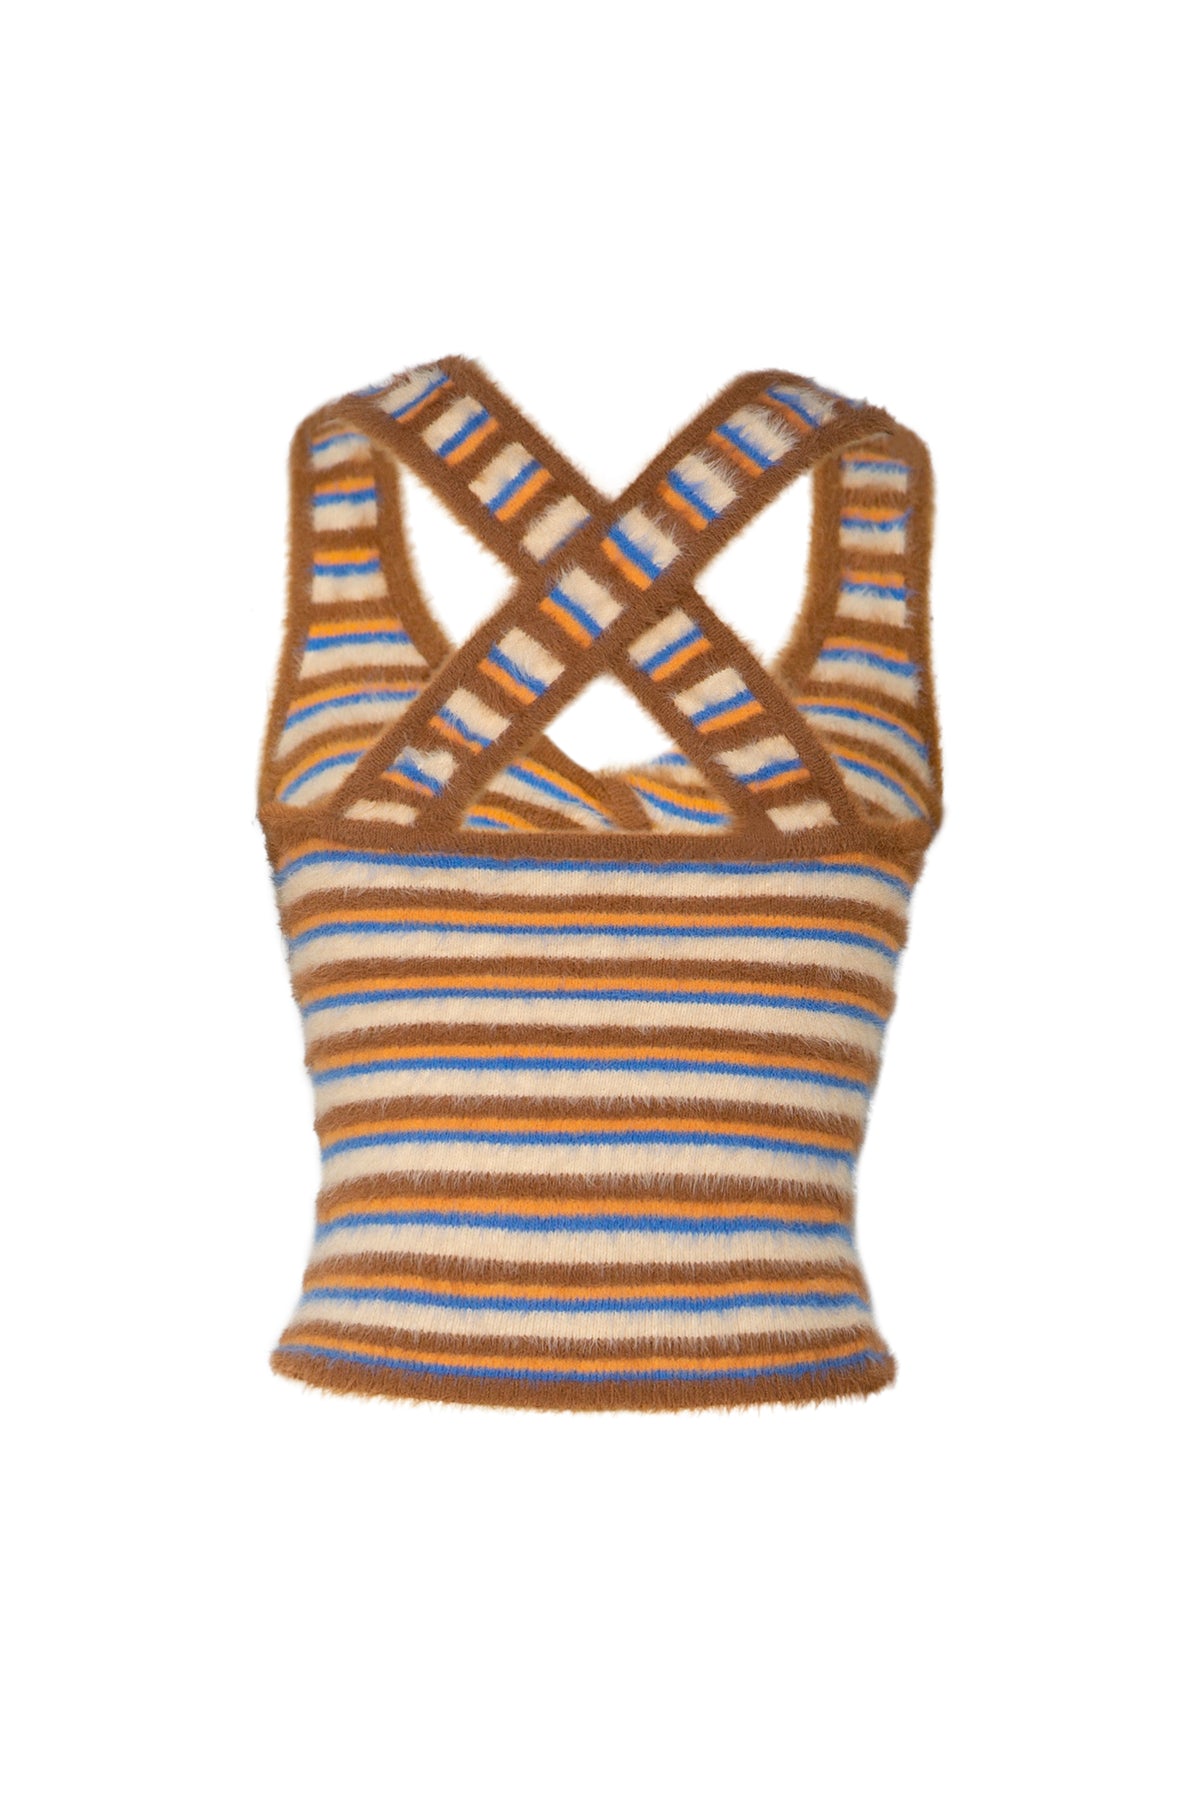 Estie Knit Set - Coco Stripe